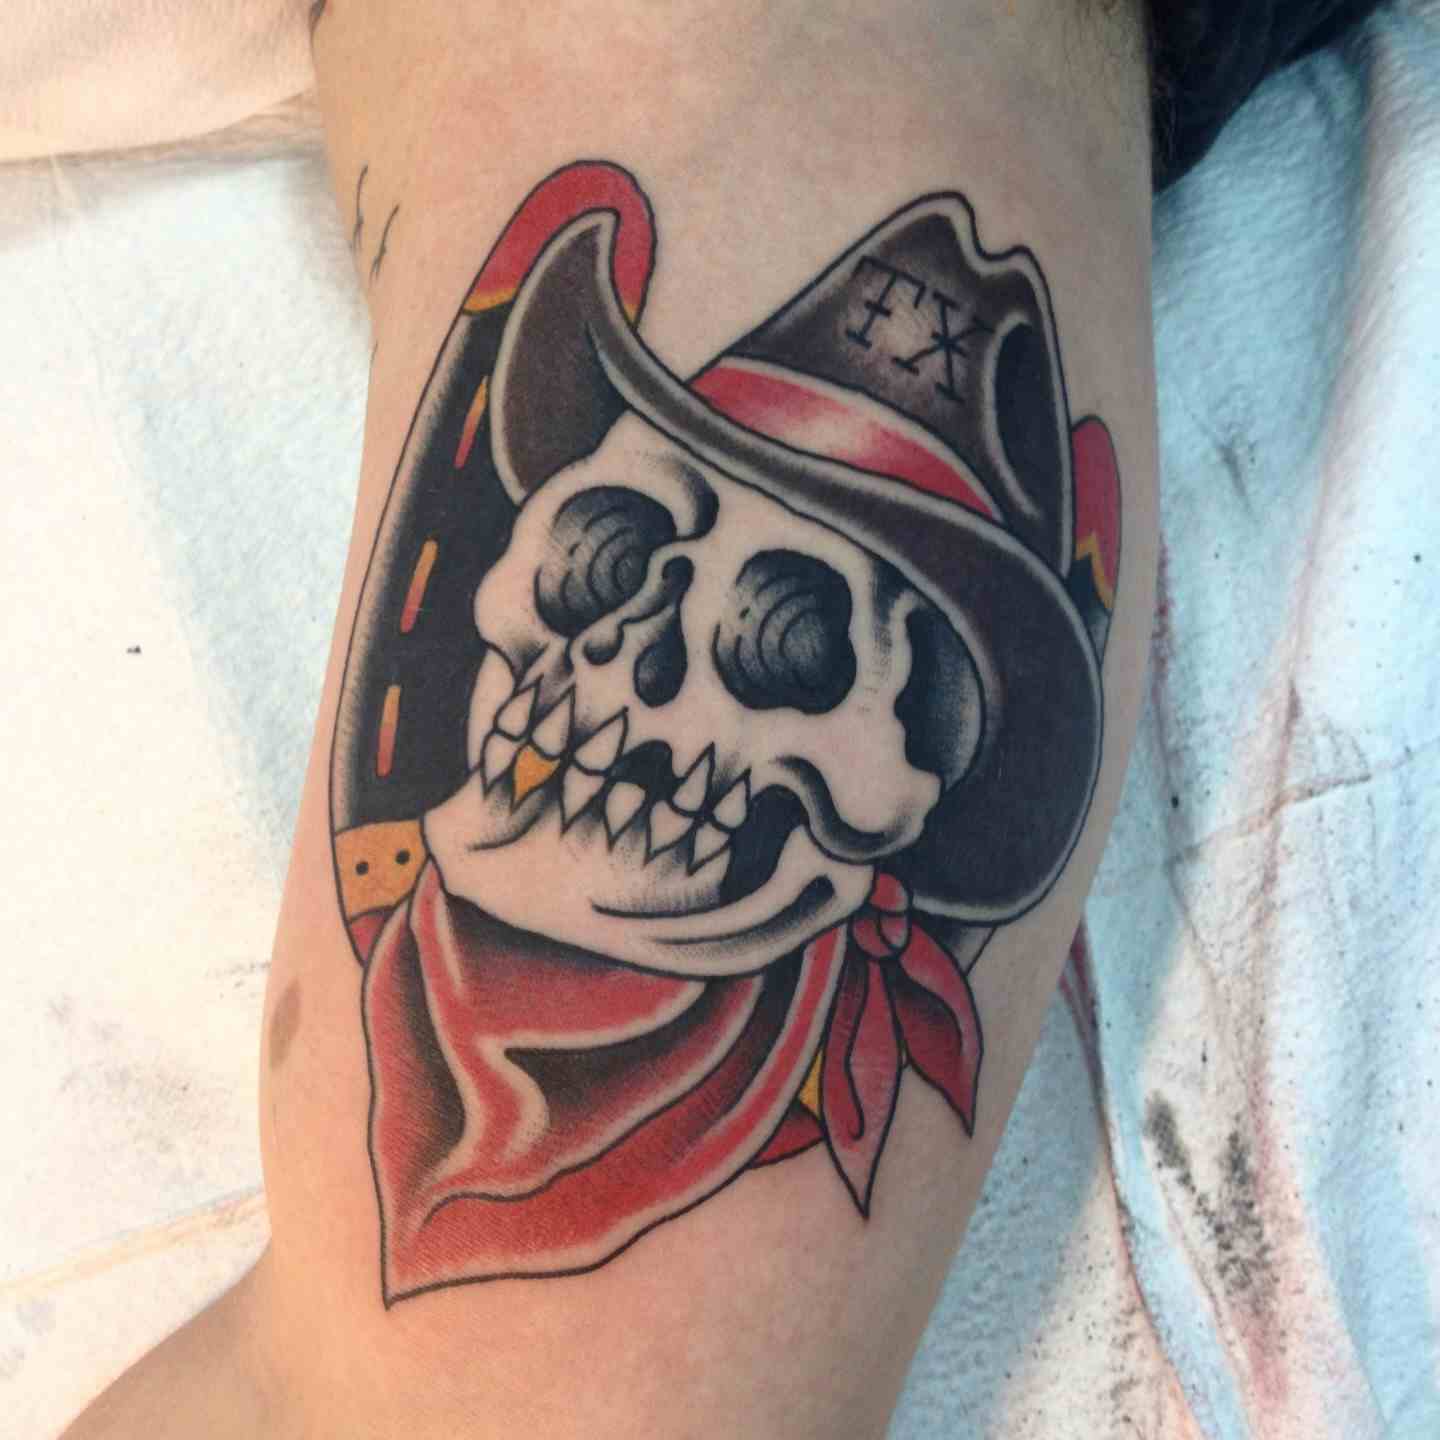 Outlaw skull tattoo